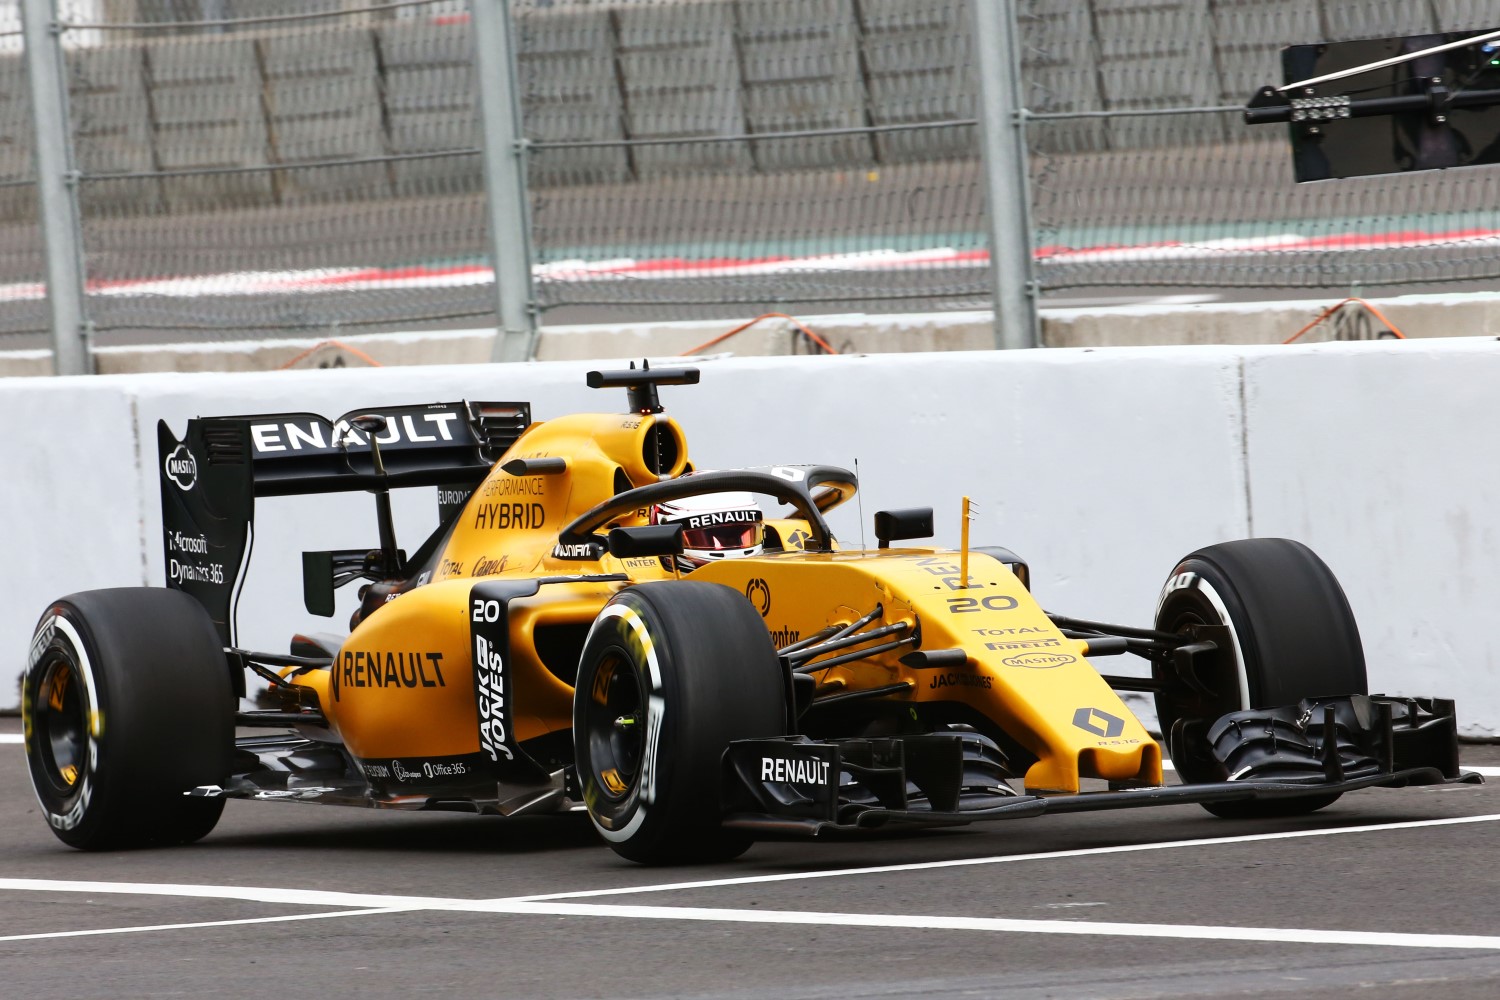 Magnussen not sad to leave Renault team